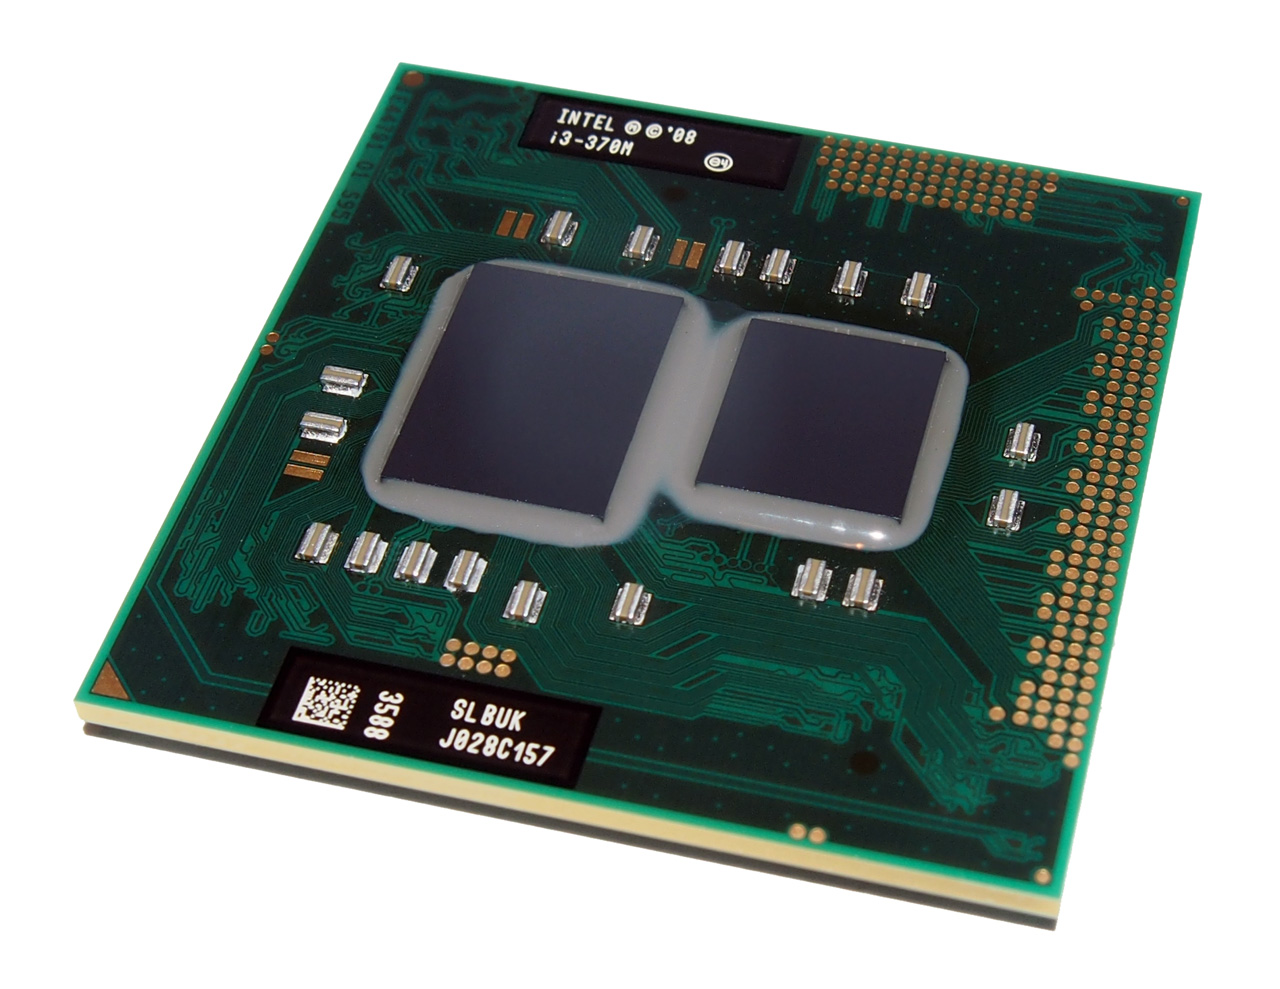 Интел м. Intel i3-370m. Core i3 m370. SLBUK i3-370m. Процессор Intel Core i3-370m.